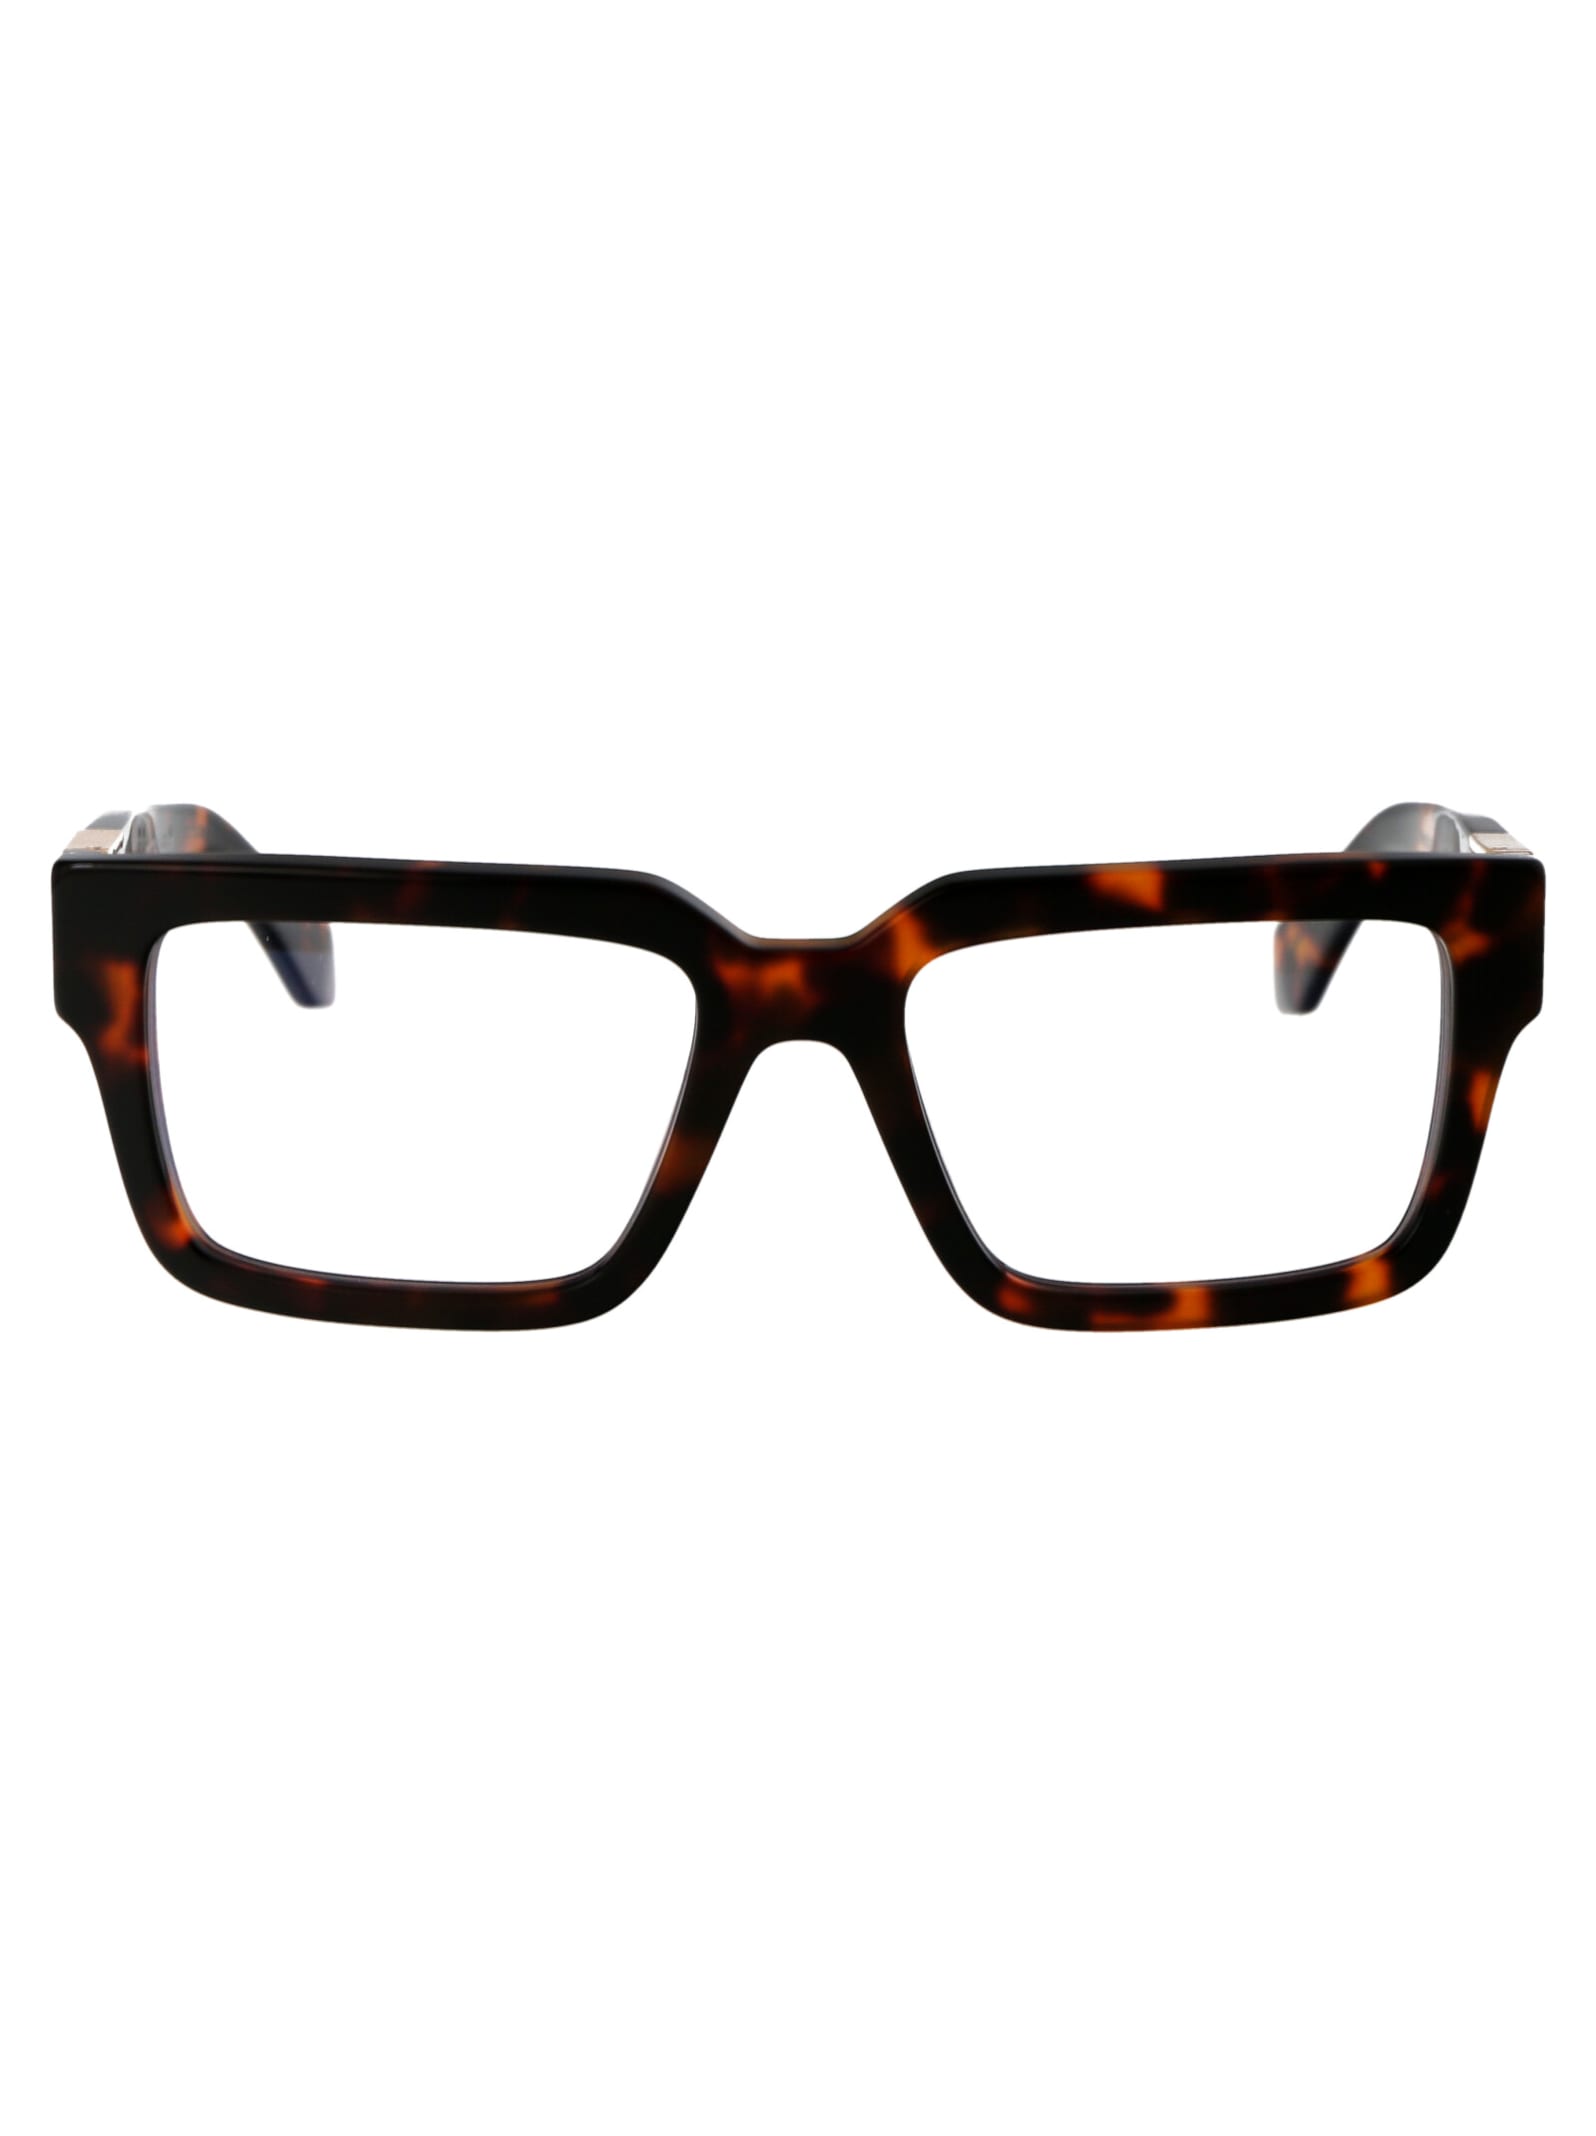 Optical Style 15 Glasses